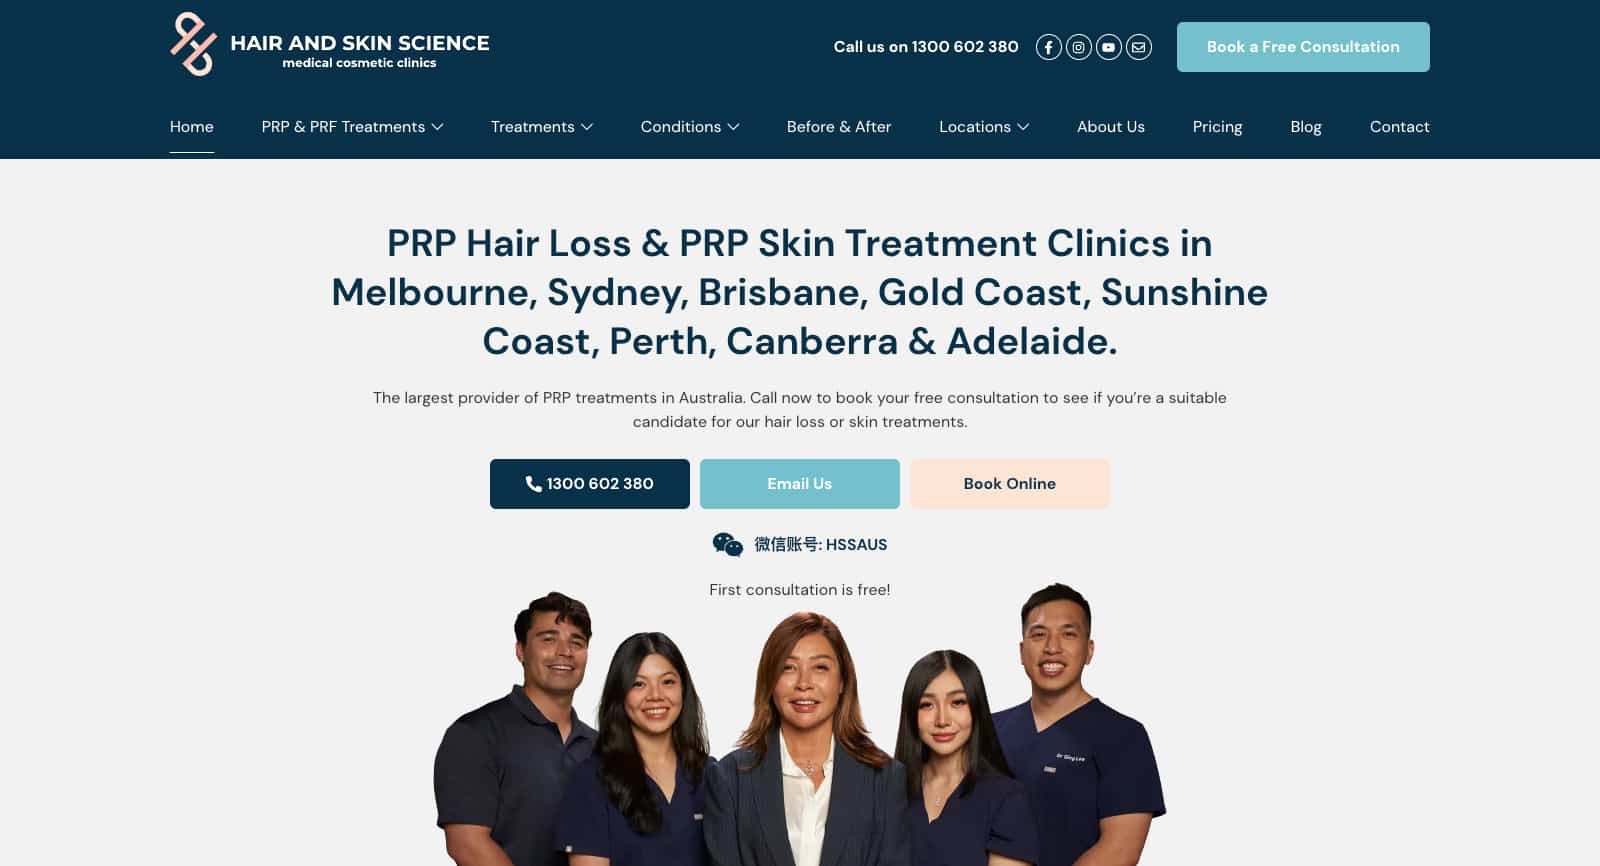 Hair and Skin Science Sydney CBD